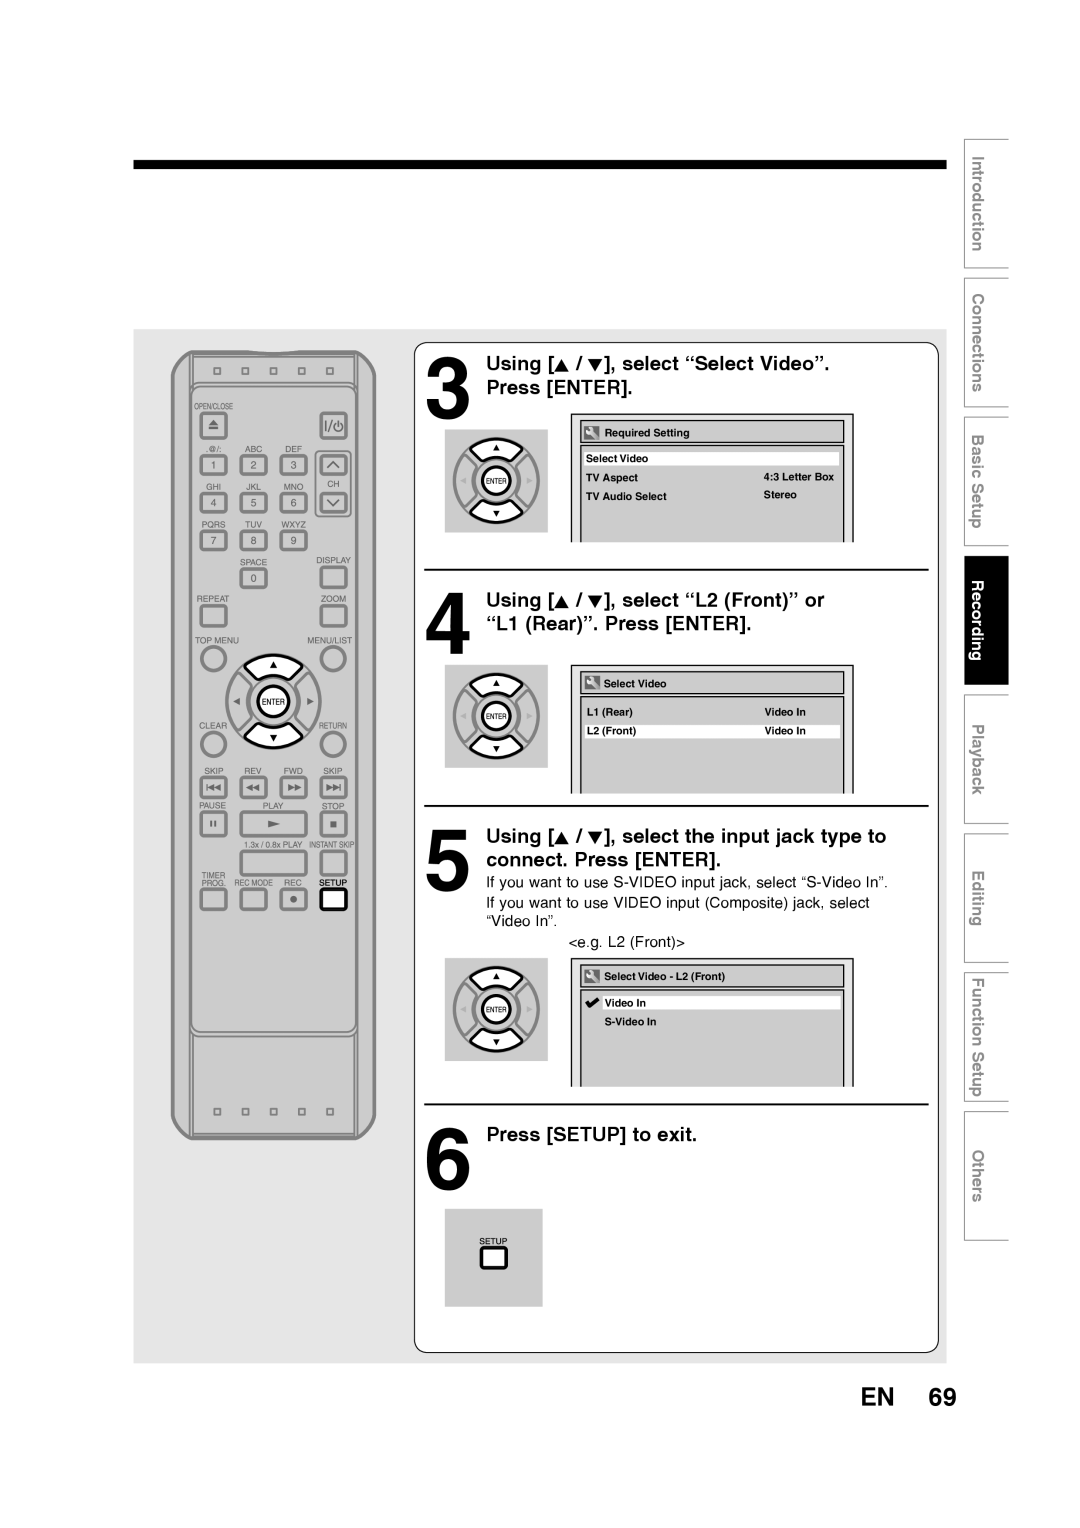 Toshiba D-RW2SU/D-RW2SC Using K / L, select “Select Video” Press ENTER, Press SETUP to exit, Editing Function Setup Others 